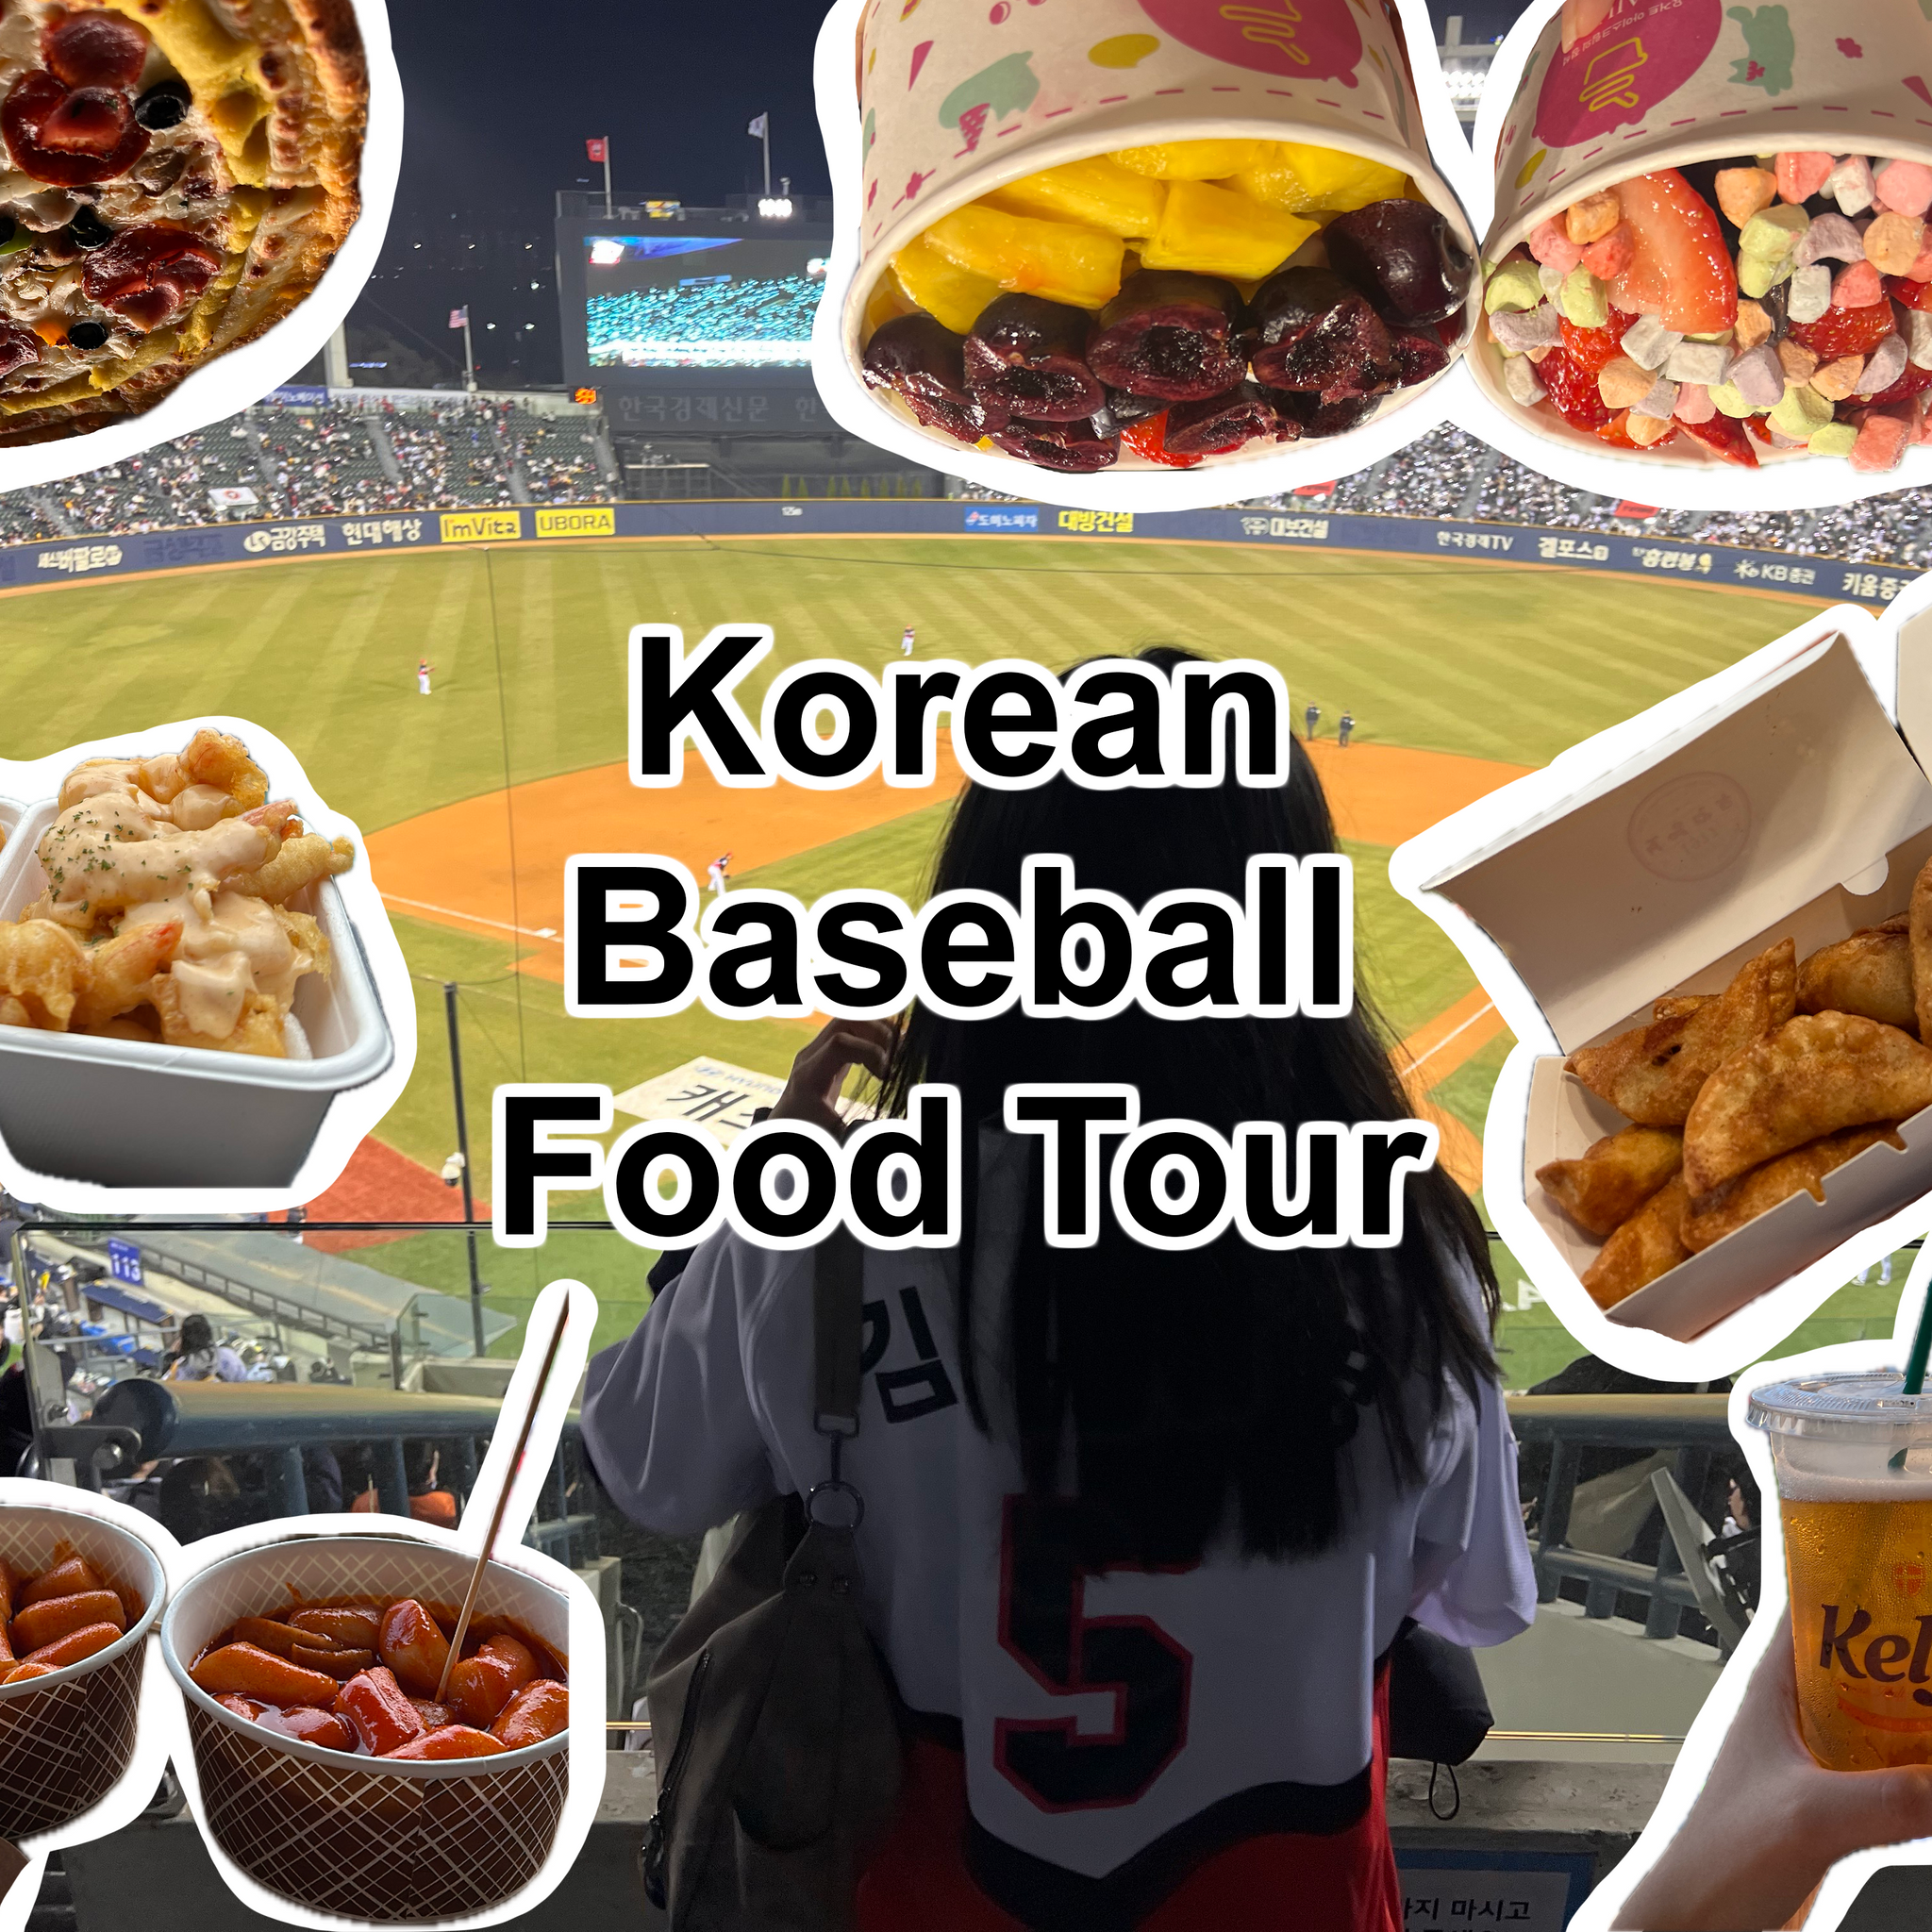 Korean Baseball Food Tour: Beyond Hot Dogs and Cracker Jacks!